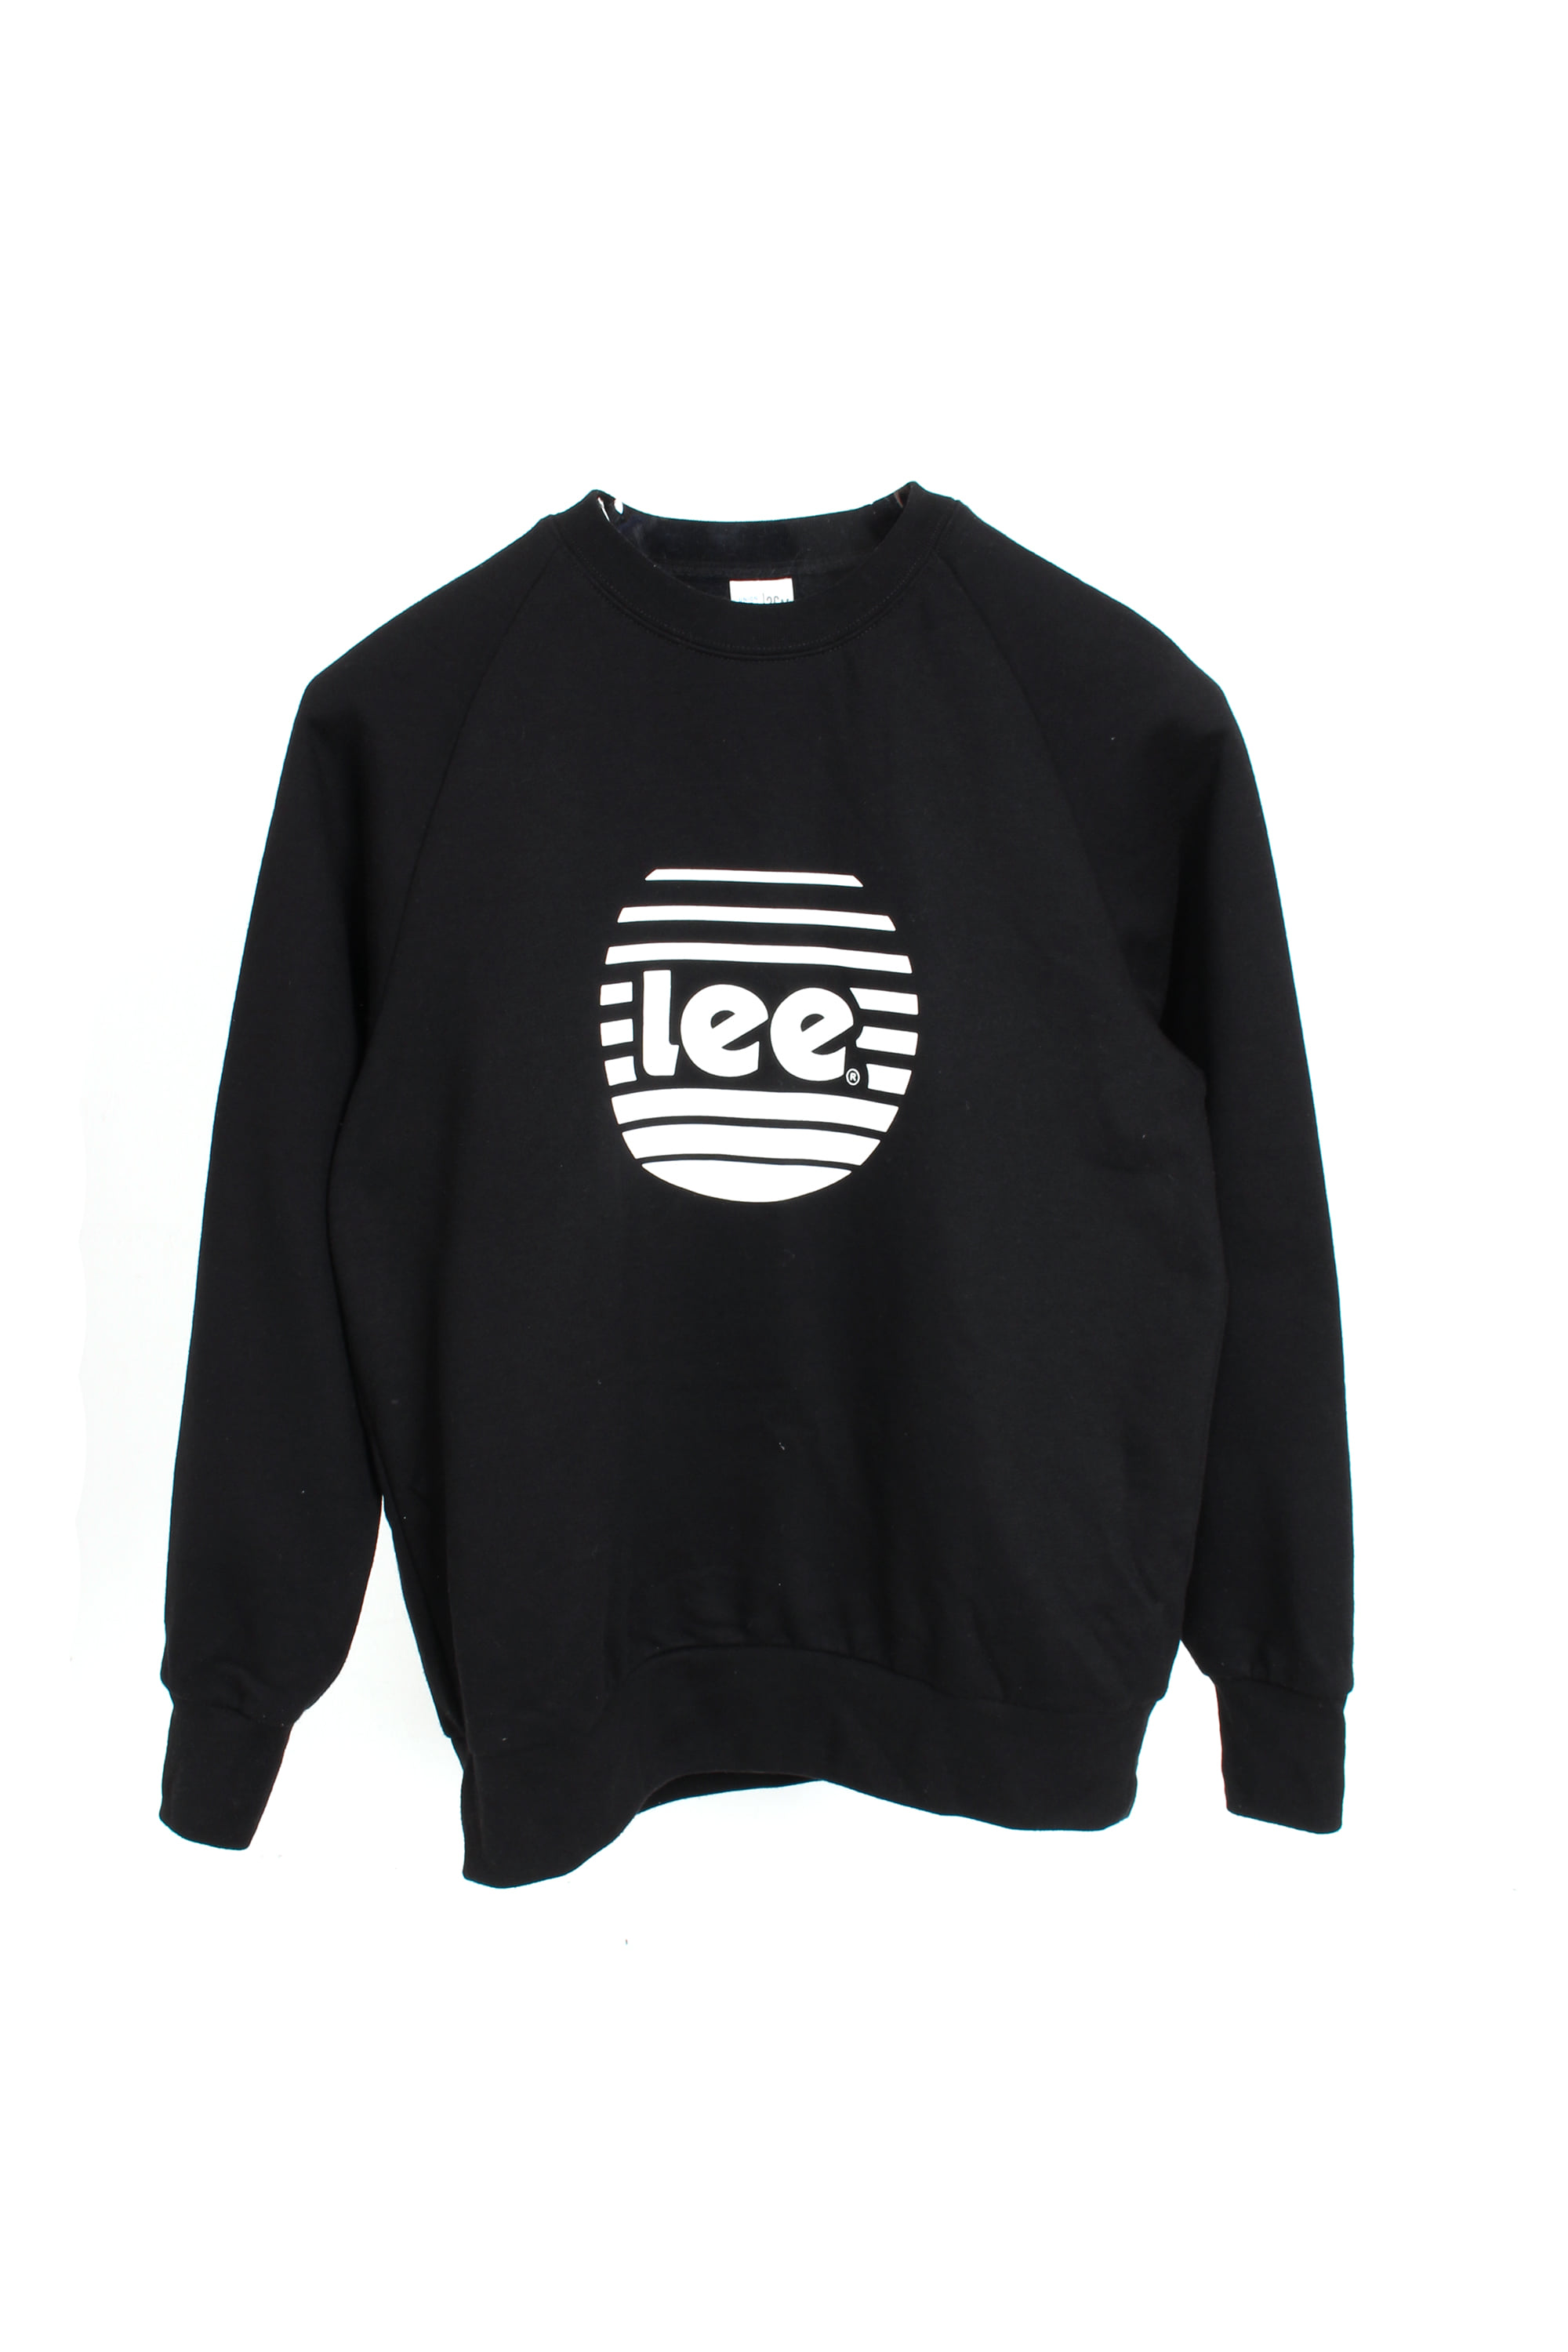 LEE Sweatshirts(M)